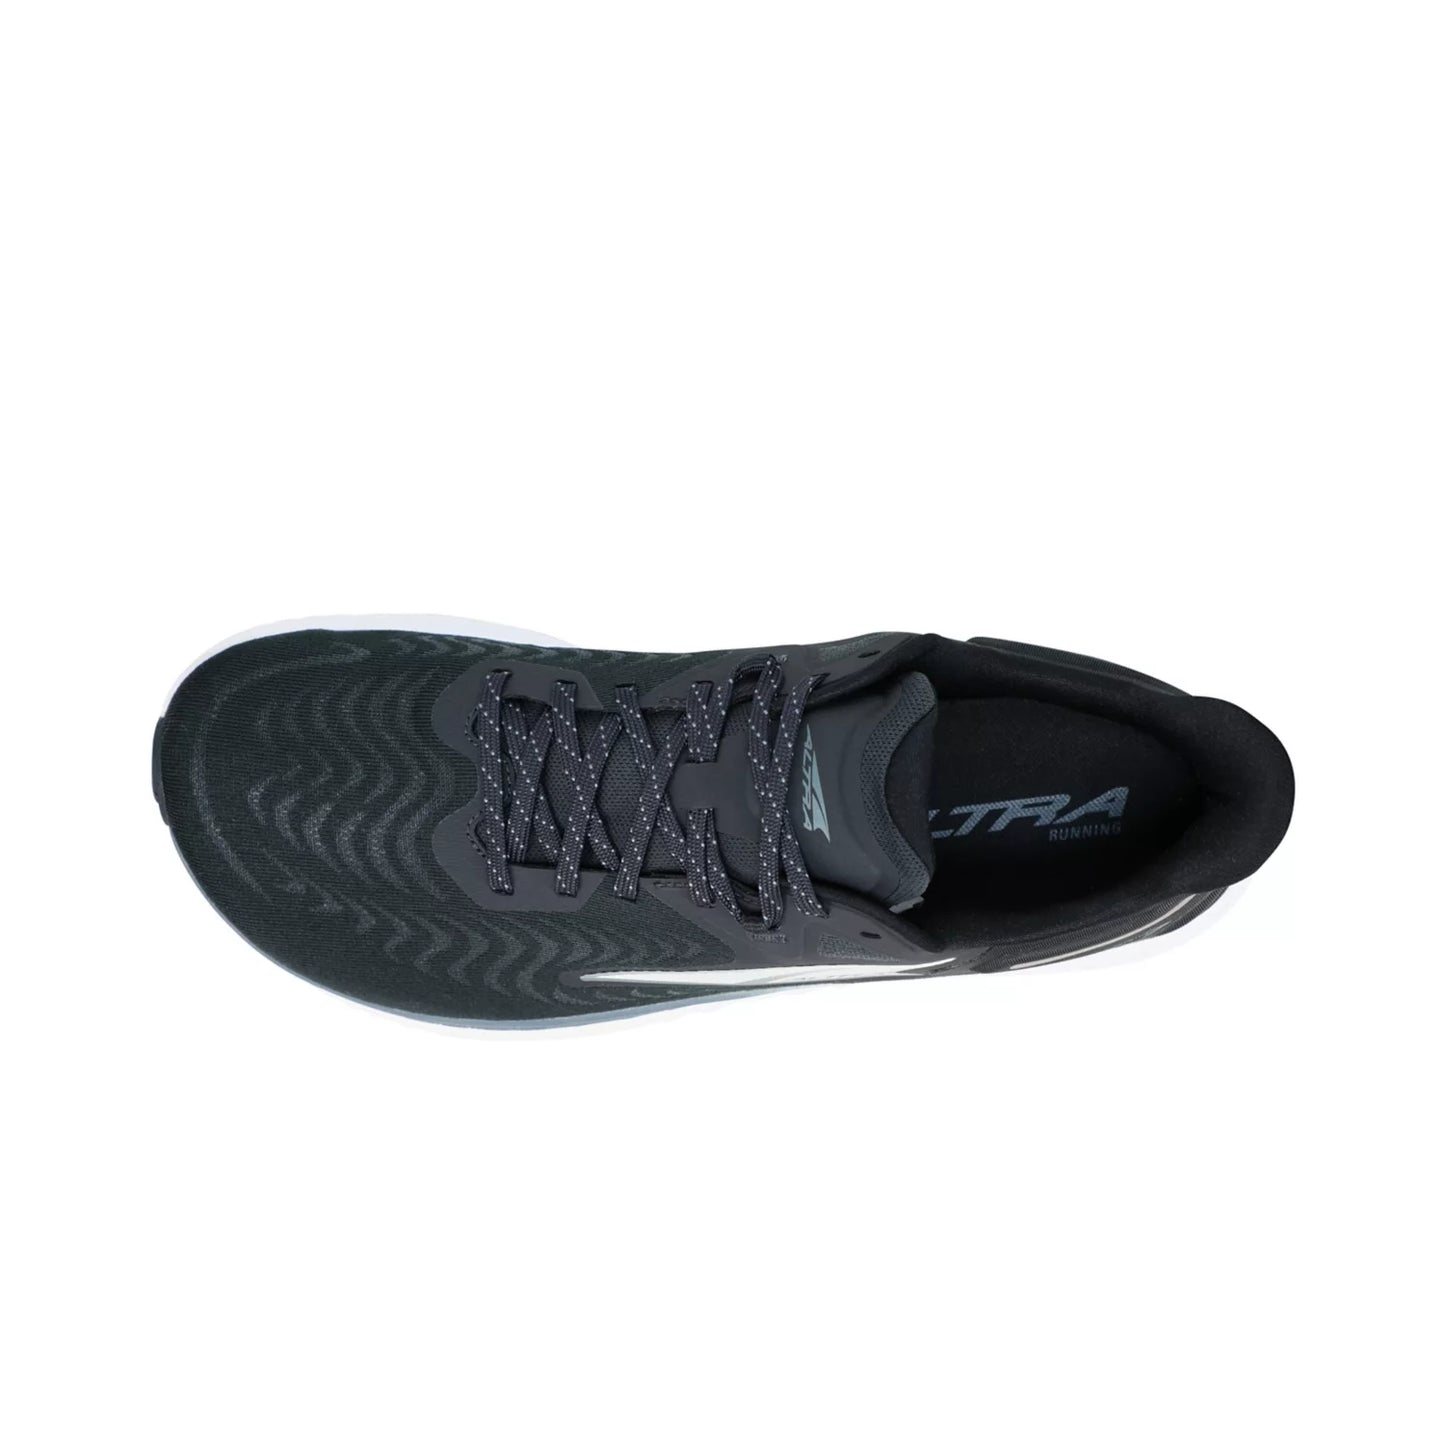 Altra Men's Torin 7 Running Sneakers - Black